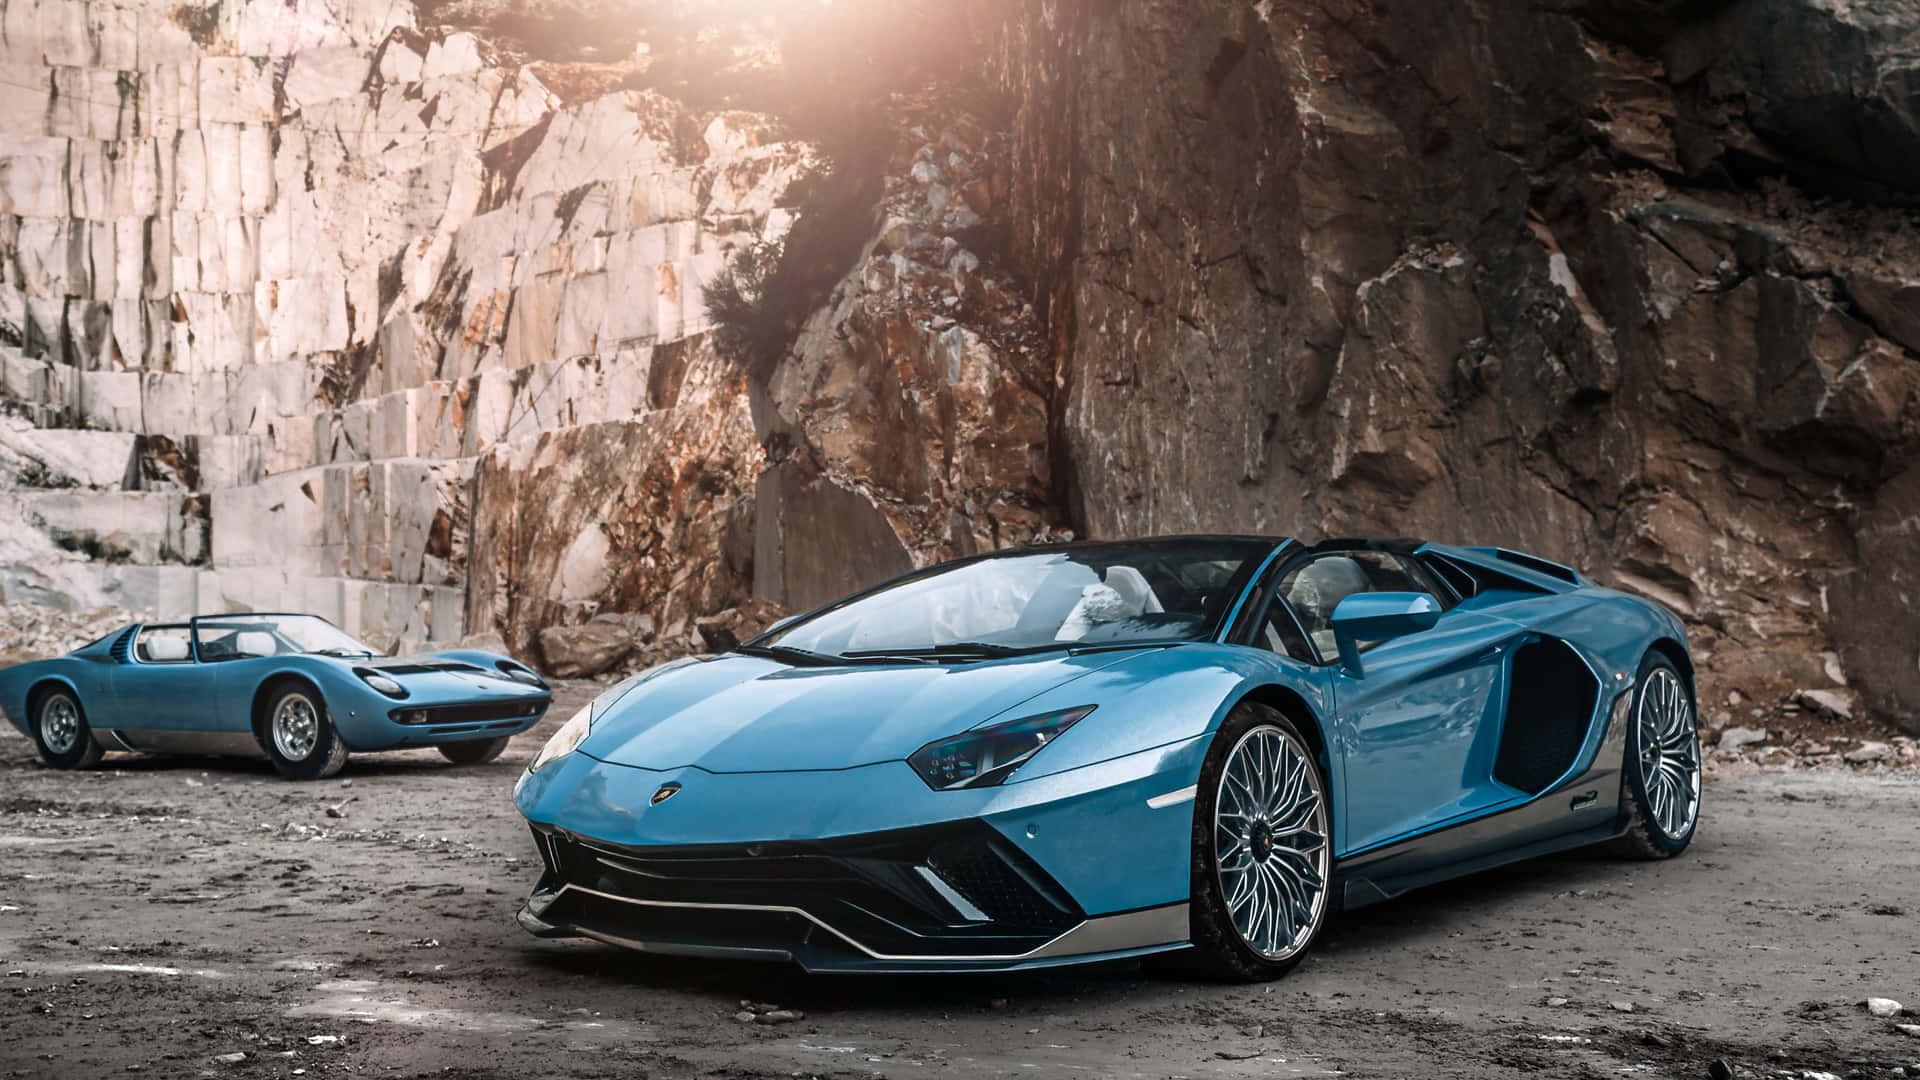 Caption: Luxury Meets Speed In The Sleek Lamborghini Aventador Wallpaper